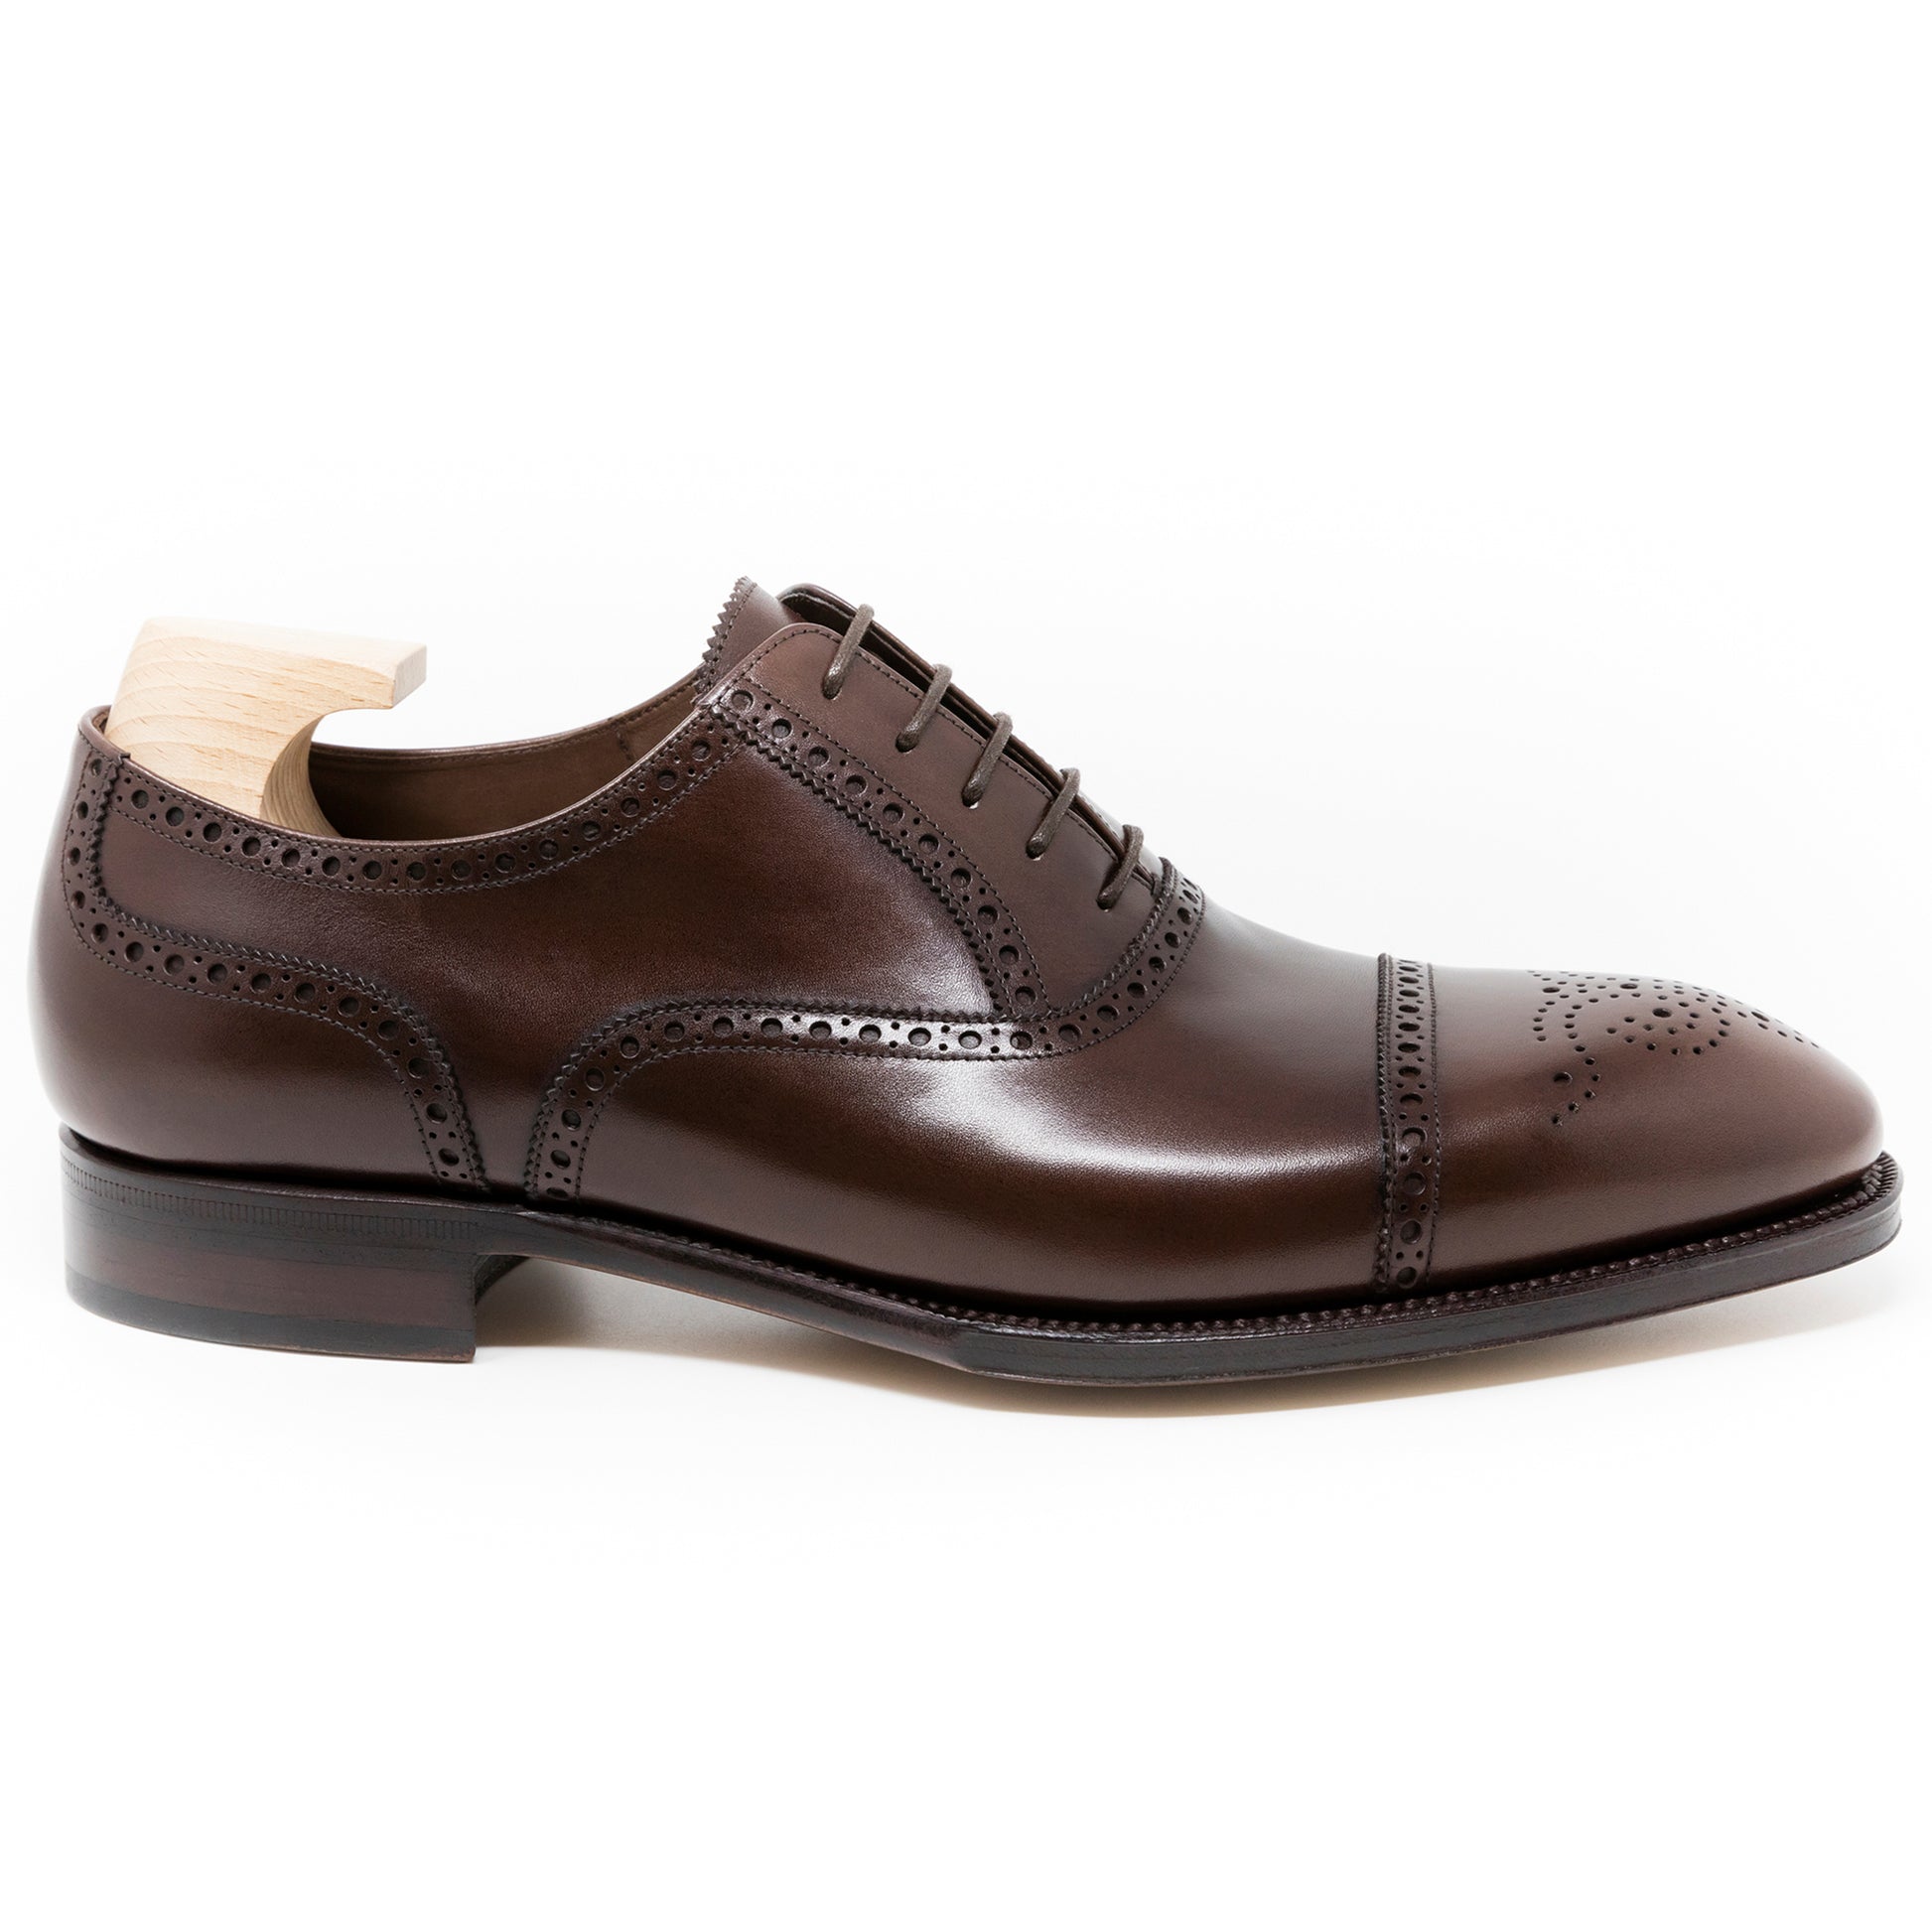 TLB Mallorca leather shoes 555 / ALAN / VEGANO DARK BROWN